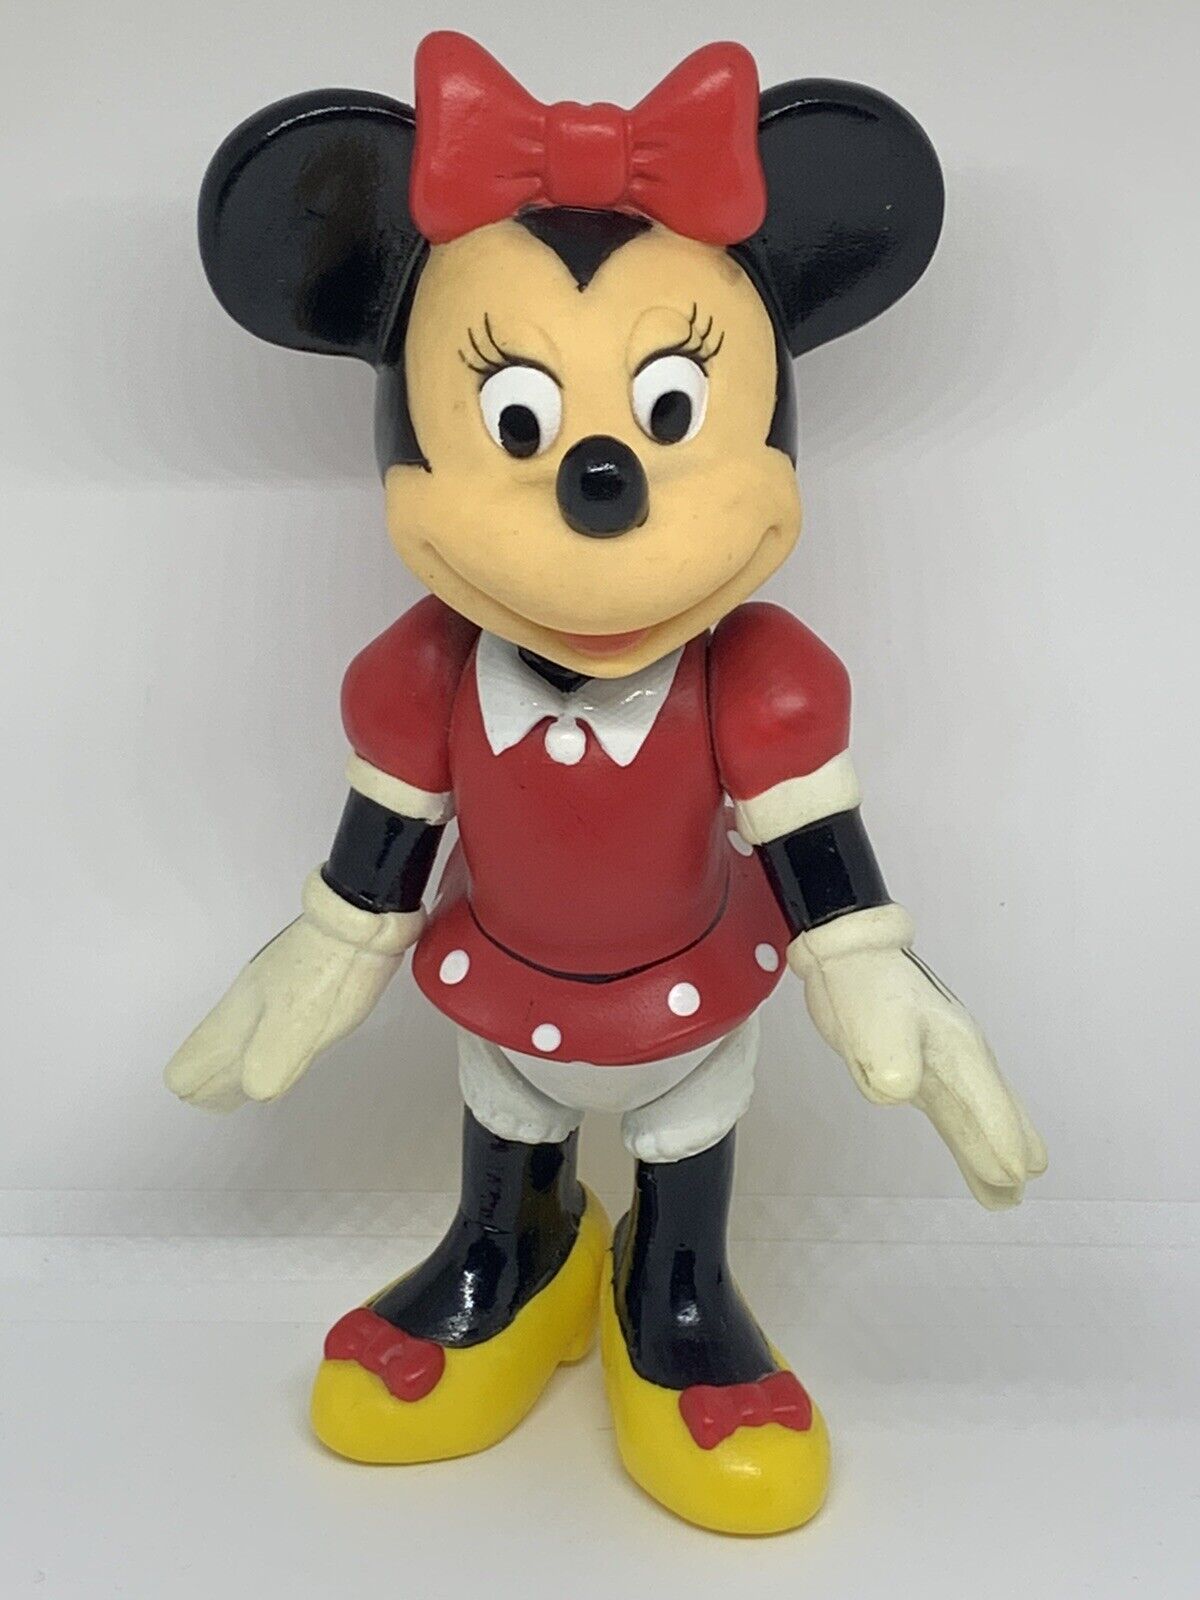 Vintage 1980's Disney Minnie Mouse Vinyl Figure Jointed 6.75”